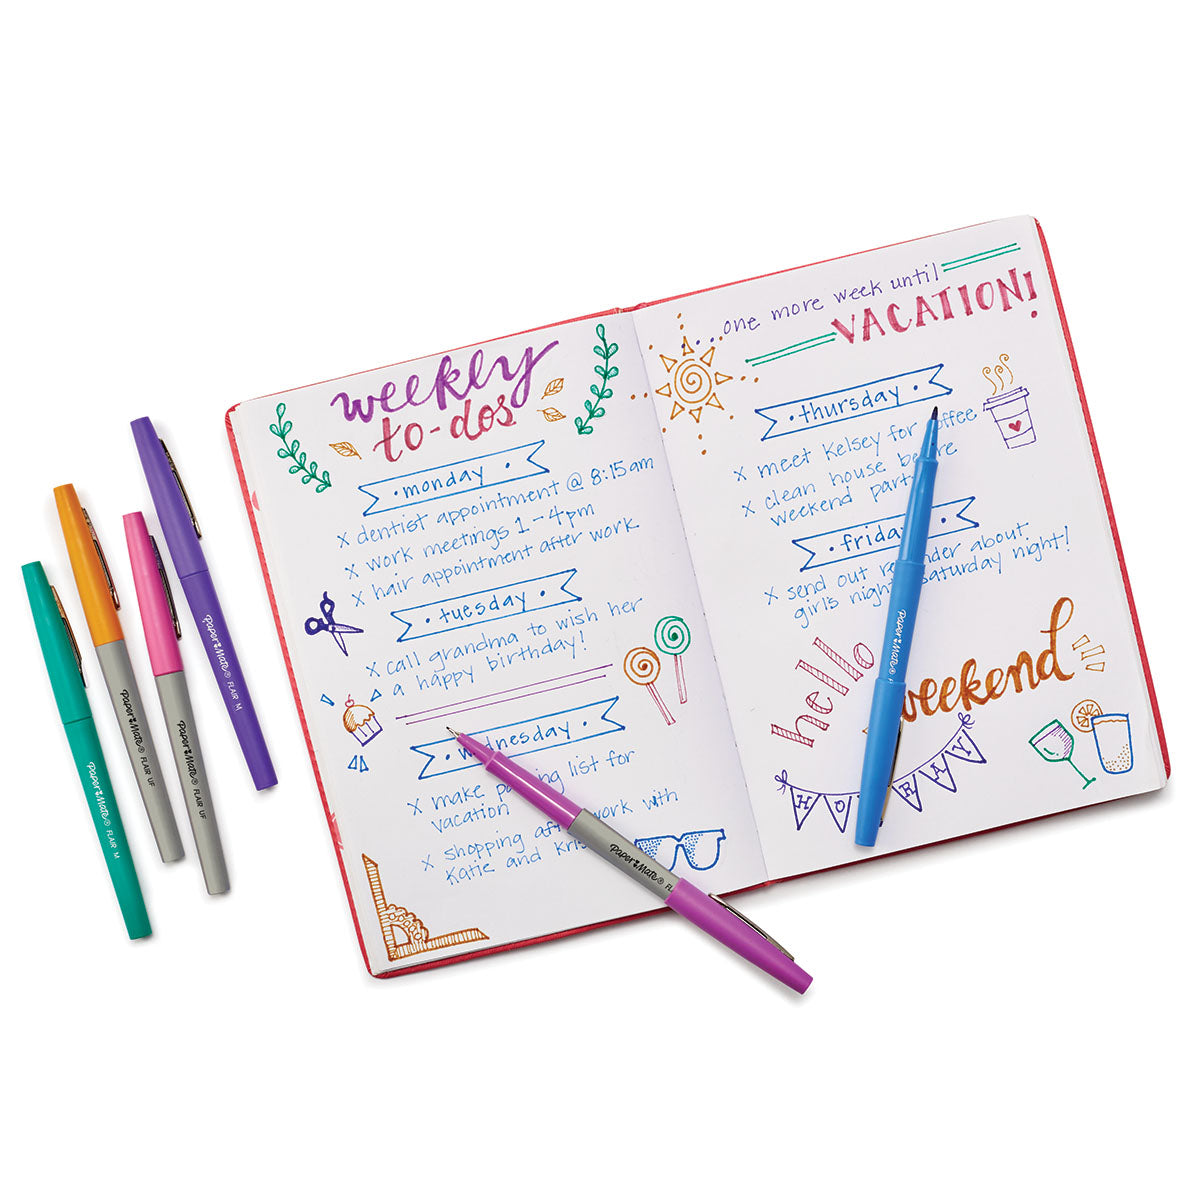 Mr. Pen- Felt Tip Pens, Pens Fine Point, Pack of 8, Fast Dry, No Smear,  Colored Pens, Journaling Pens, Felt Pens, Planner Markers, Planner Pens